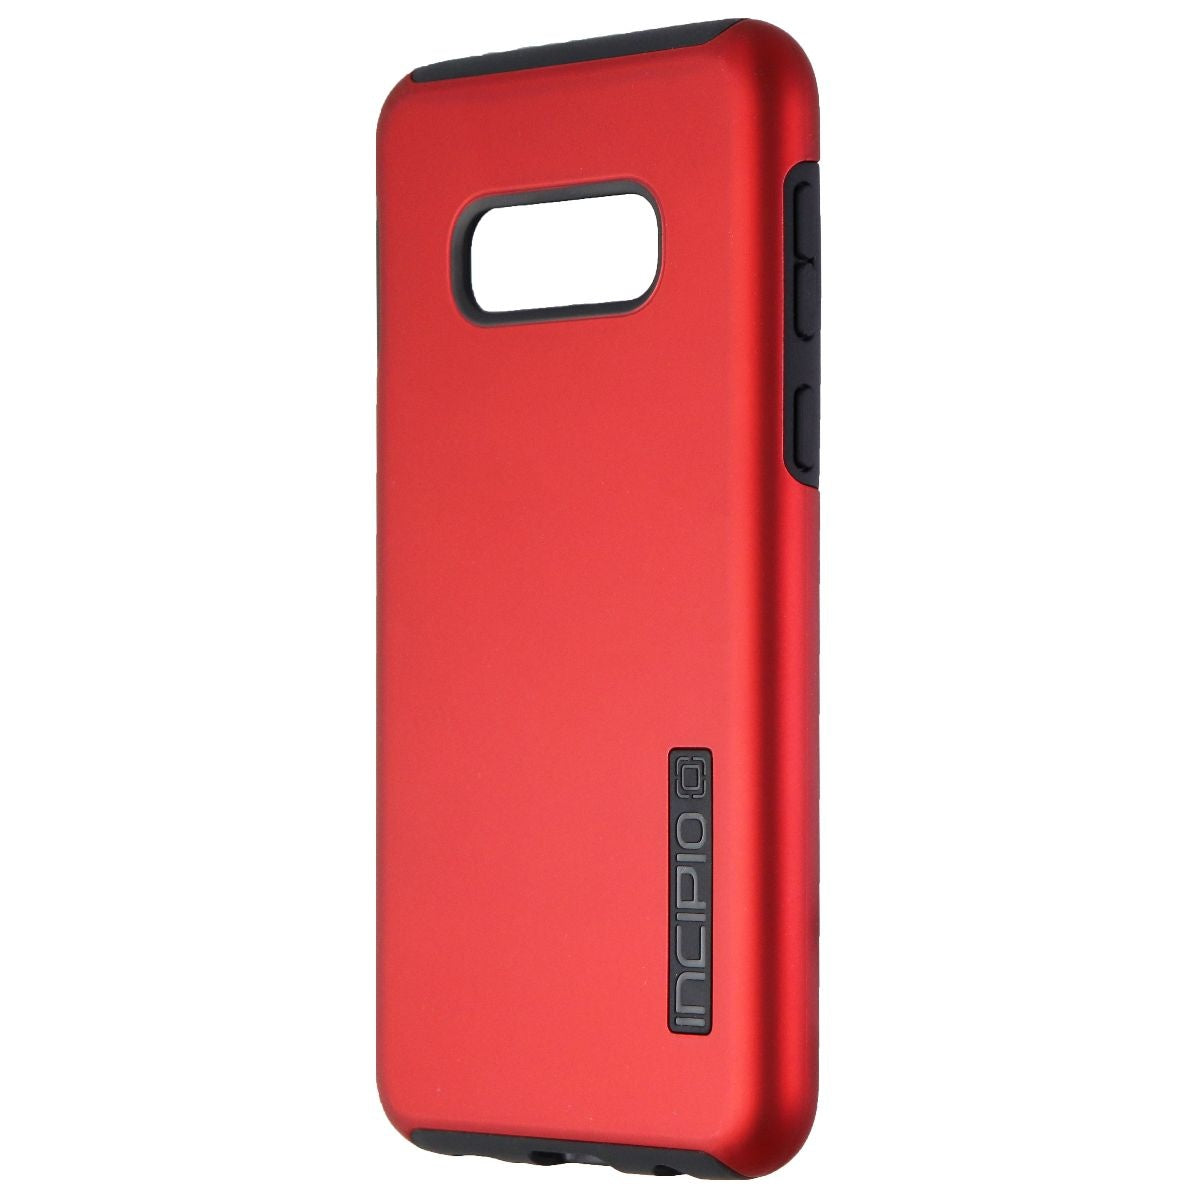 Incipio (SA-972-RBK) DualPro Case for Galaxy S10e - Iridescent Red/Black Cell Phone - Cases, Covers & Skins Incipio    - Simple Cell Bulk Wholesale Pricing - USA Seller